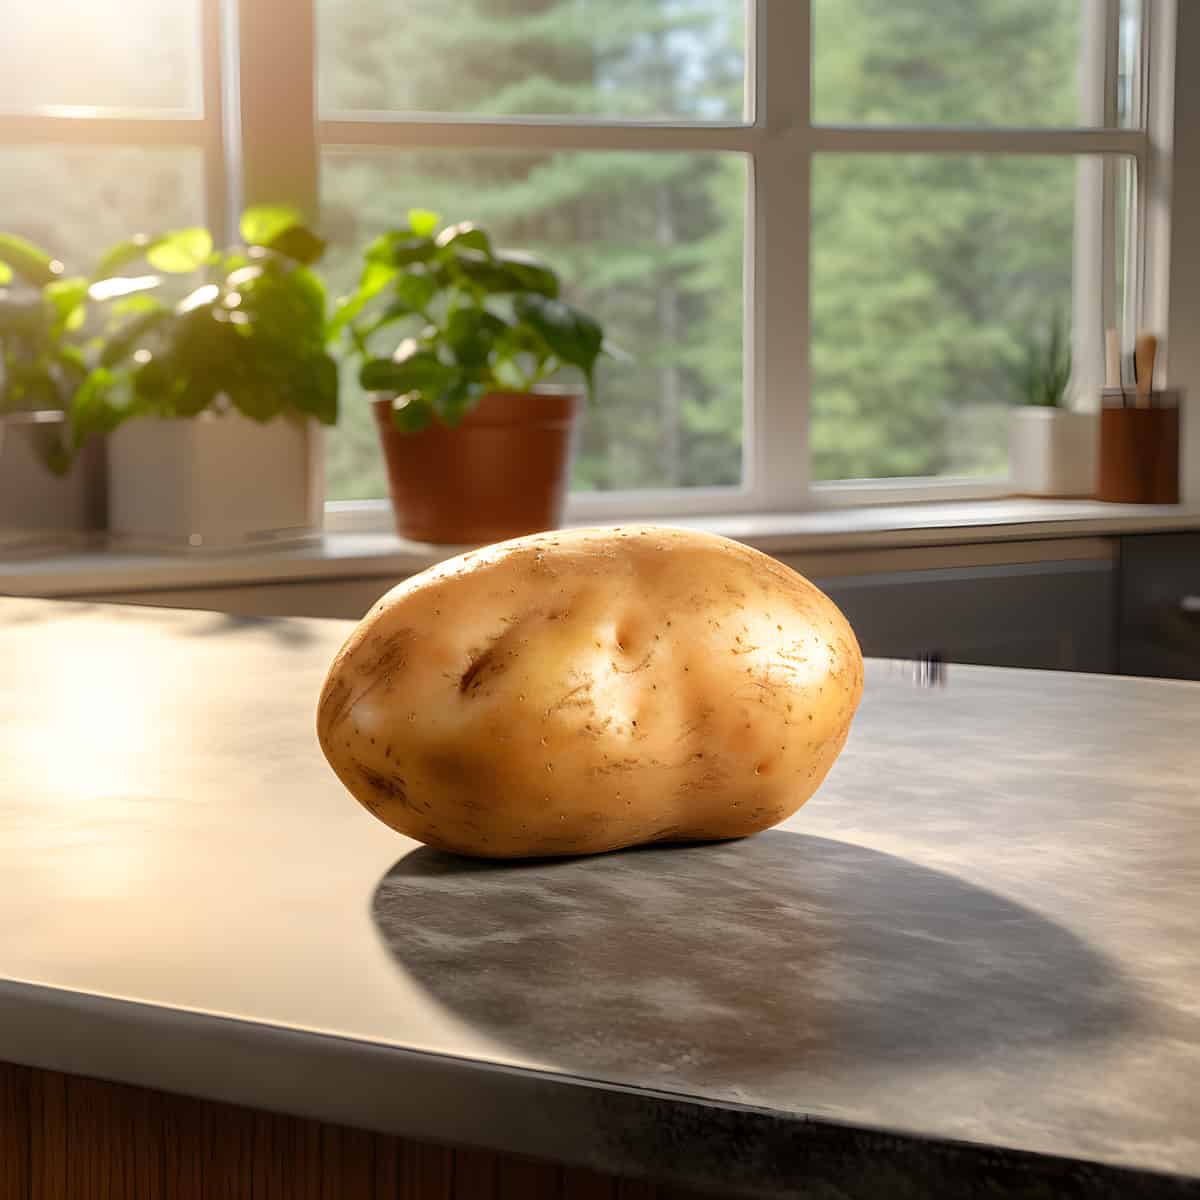 Ranger Russet Potatoes on a kitchen counter